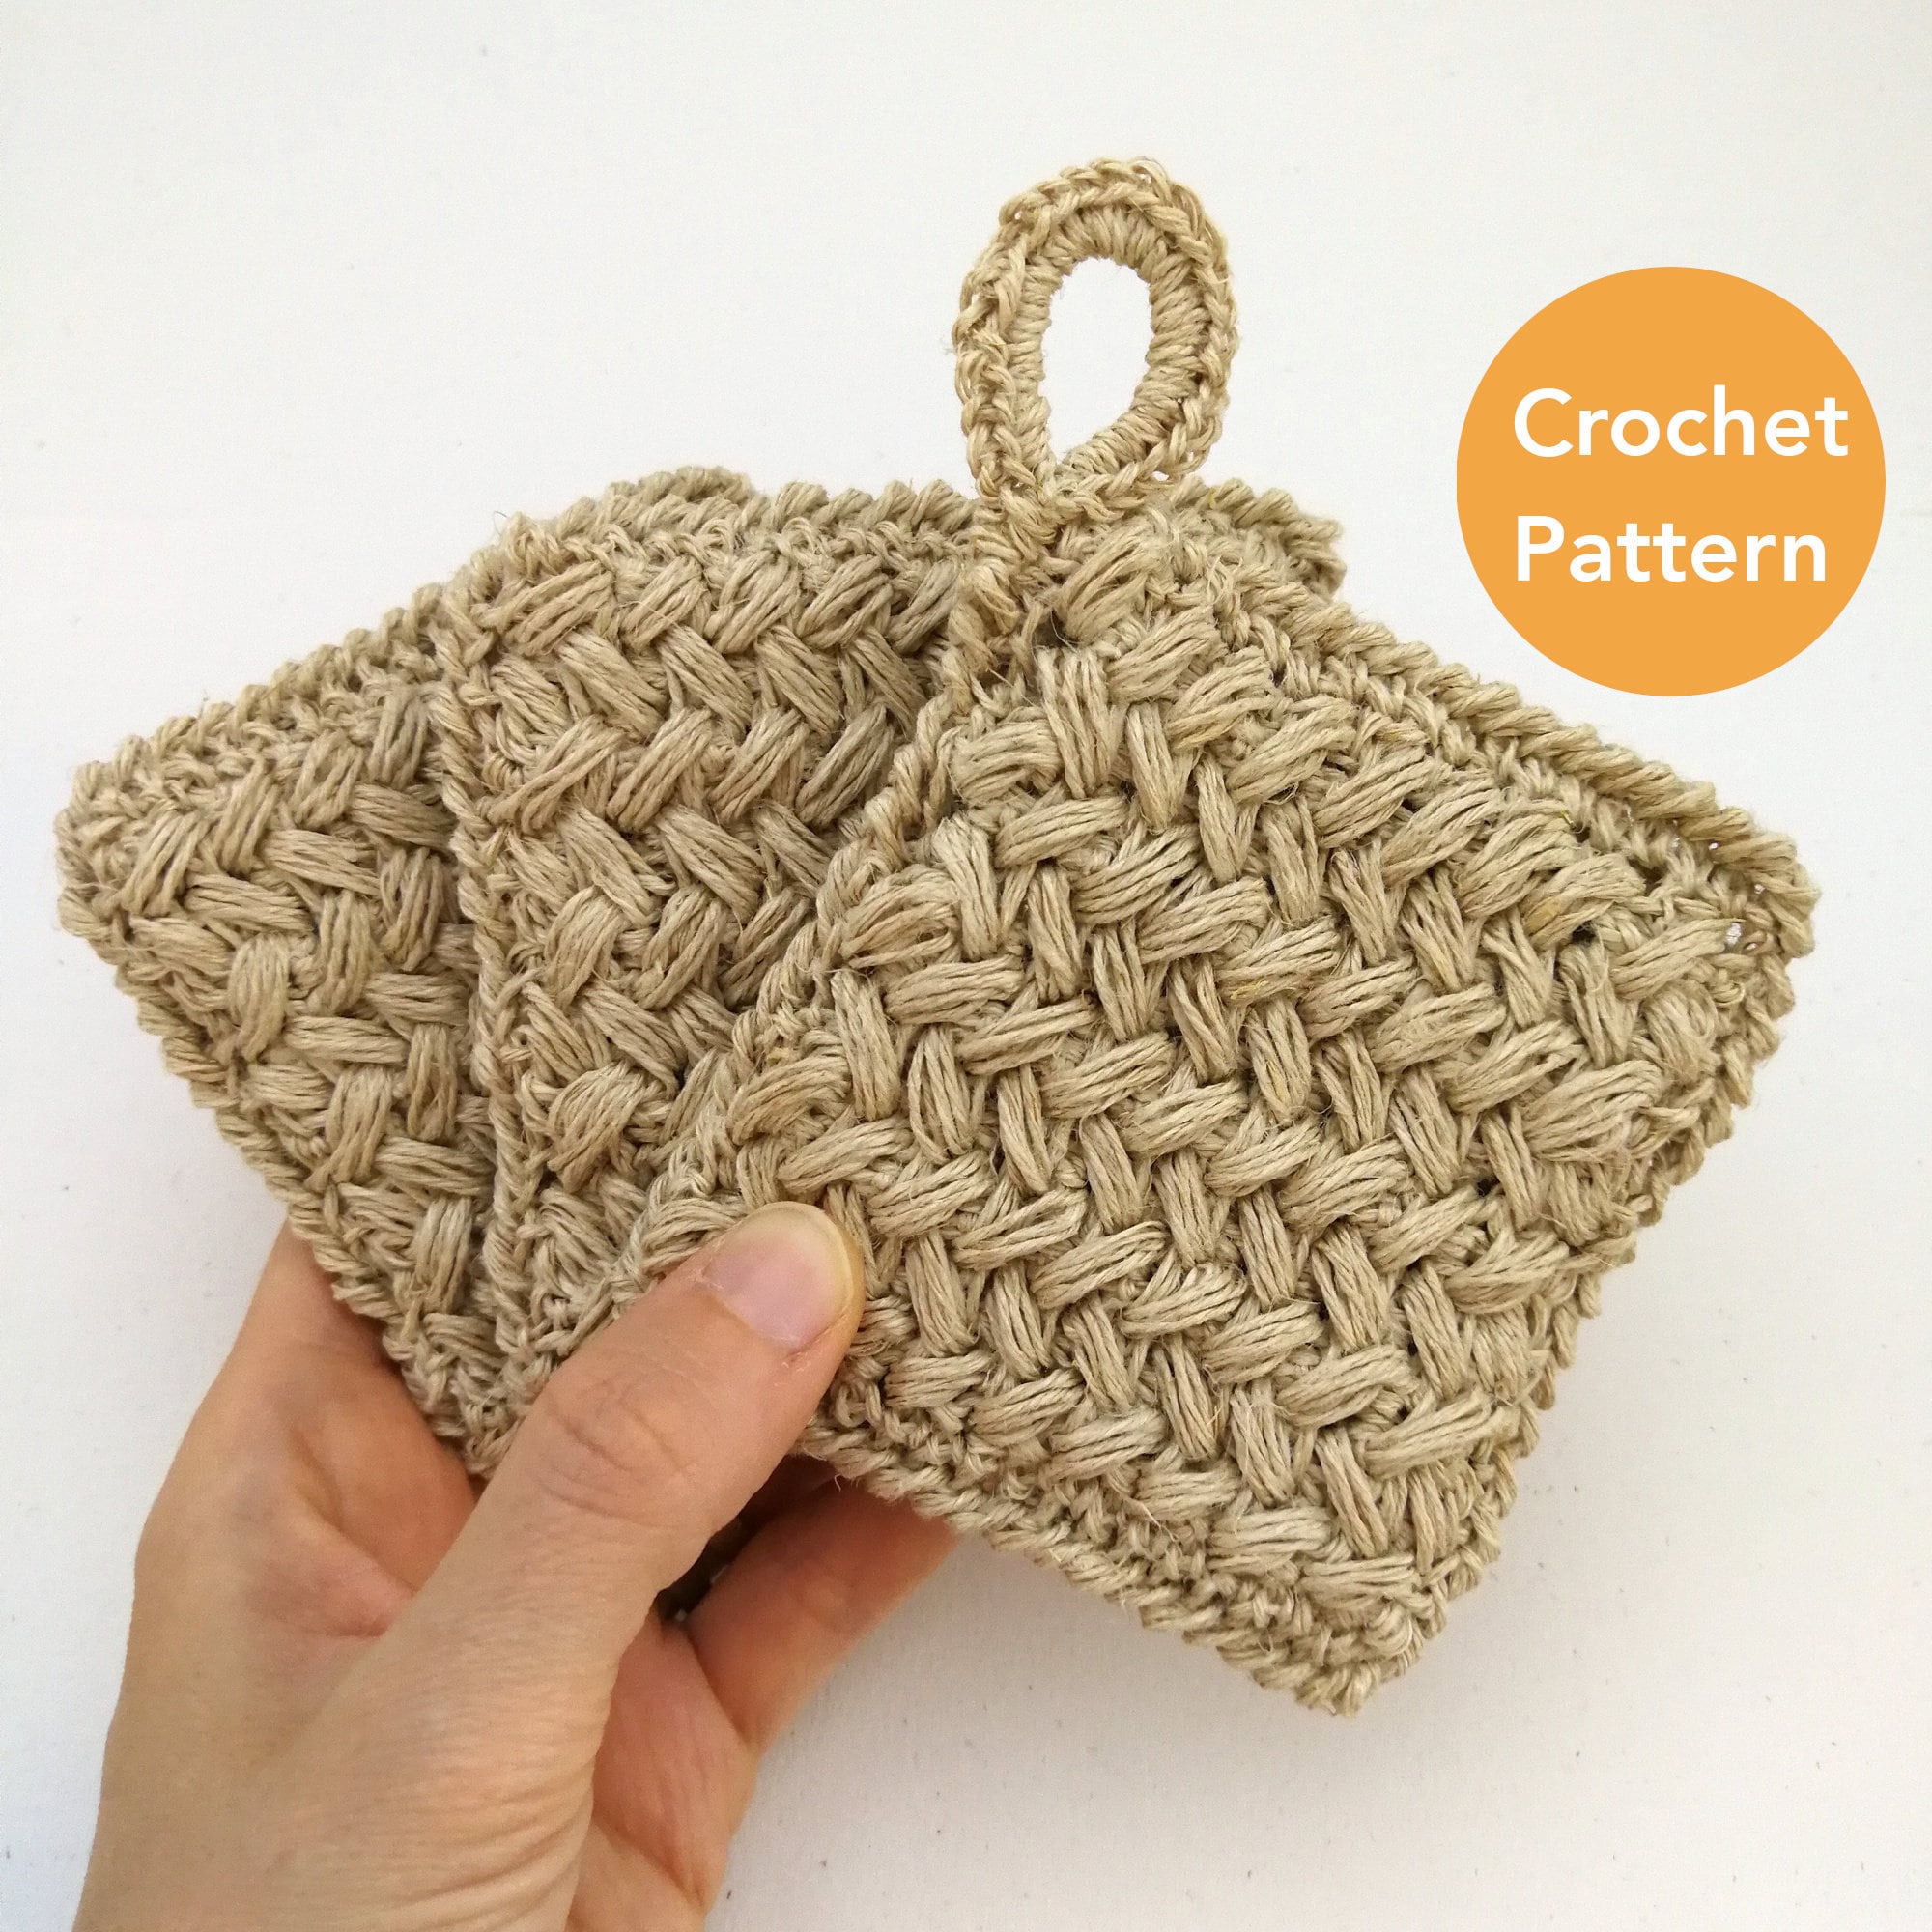 Crochet Dish Scrubber Pattern (for Messy Pots & Pans!) 